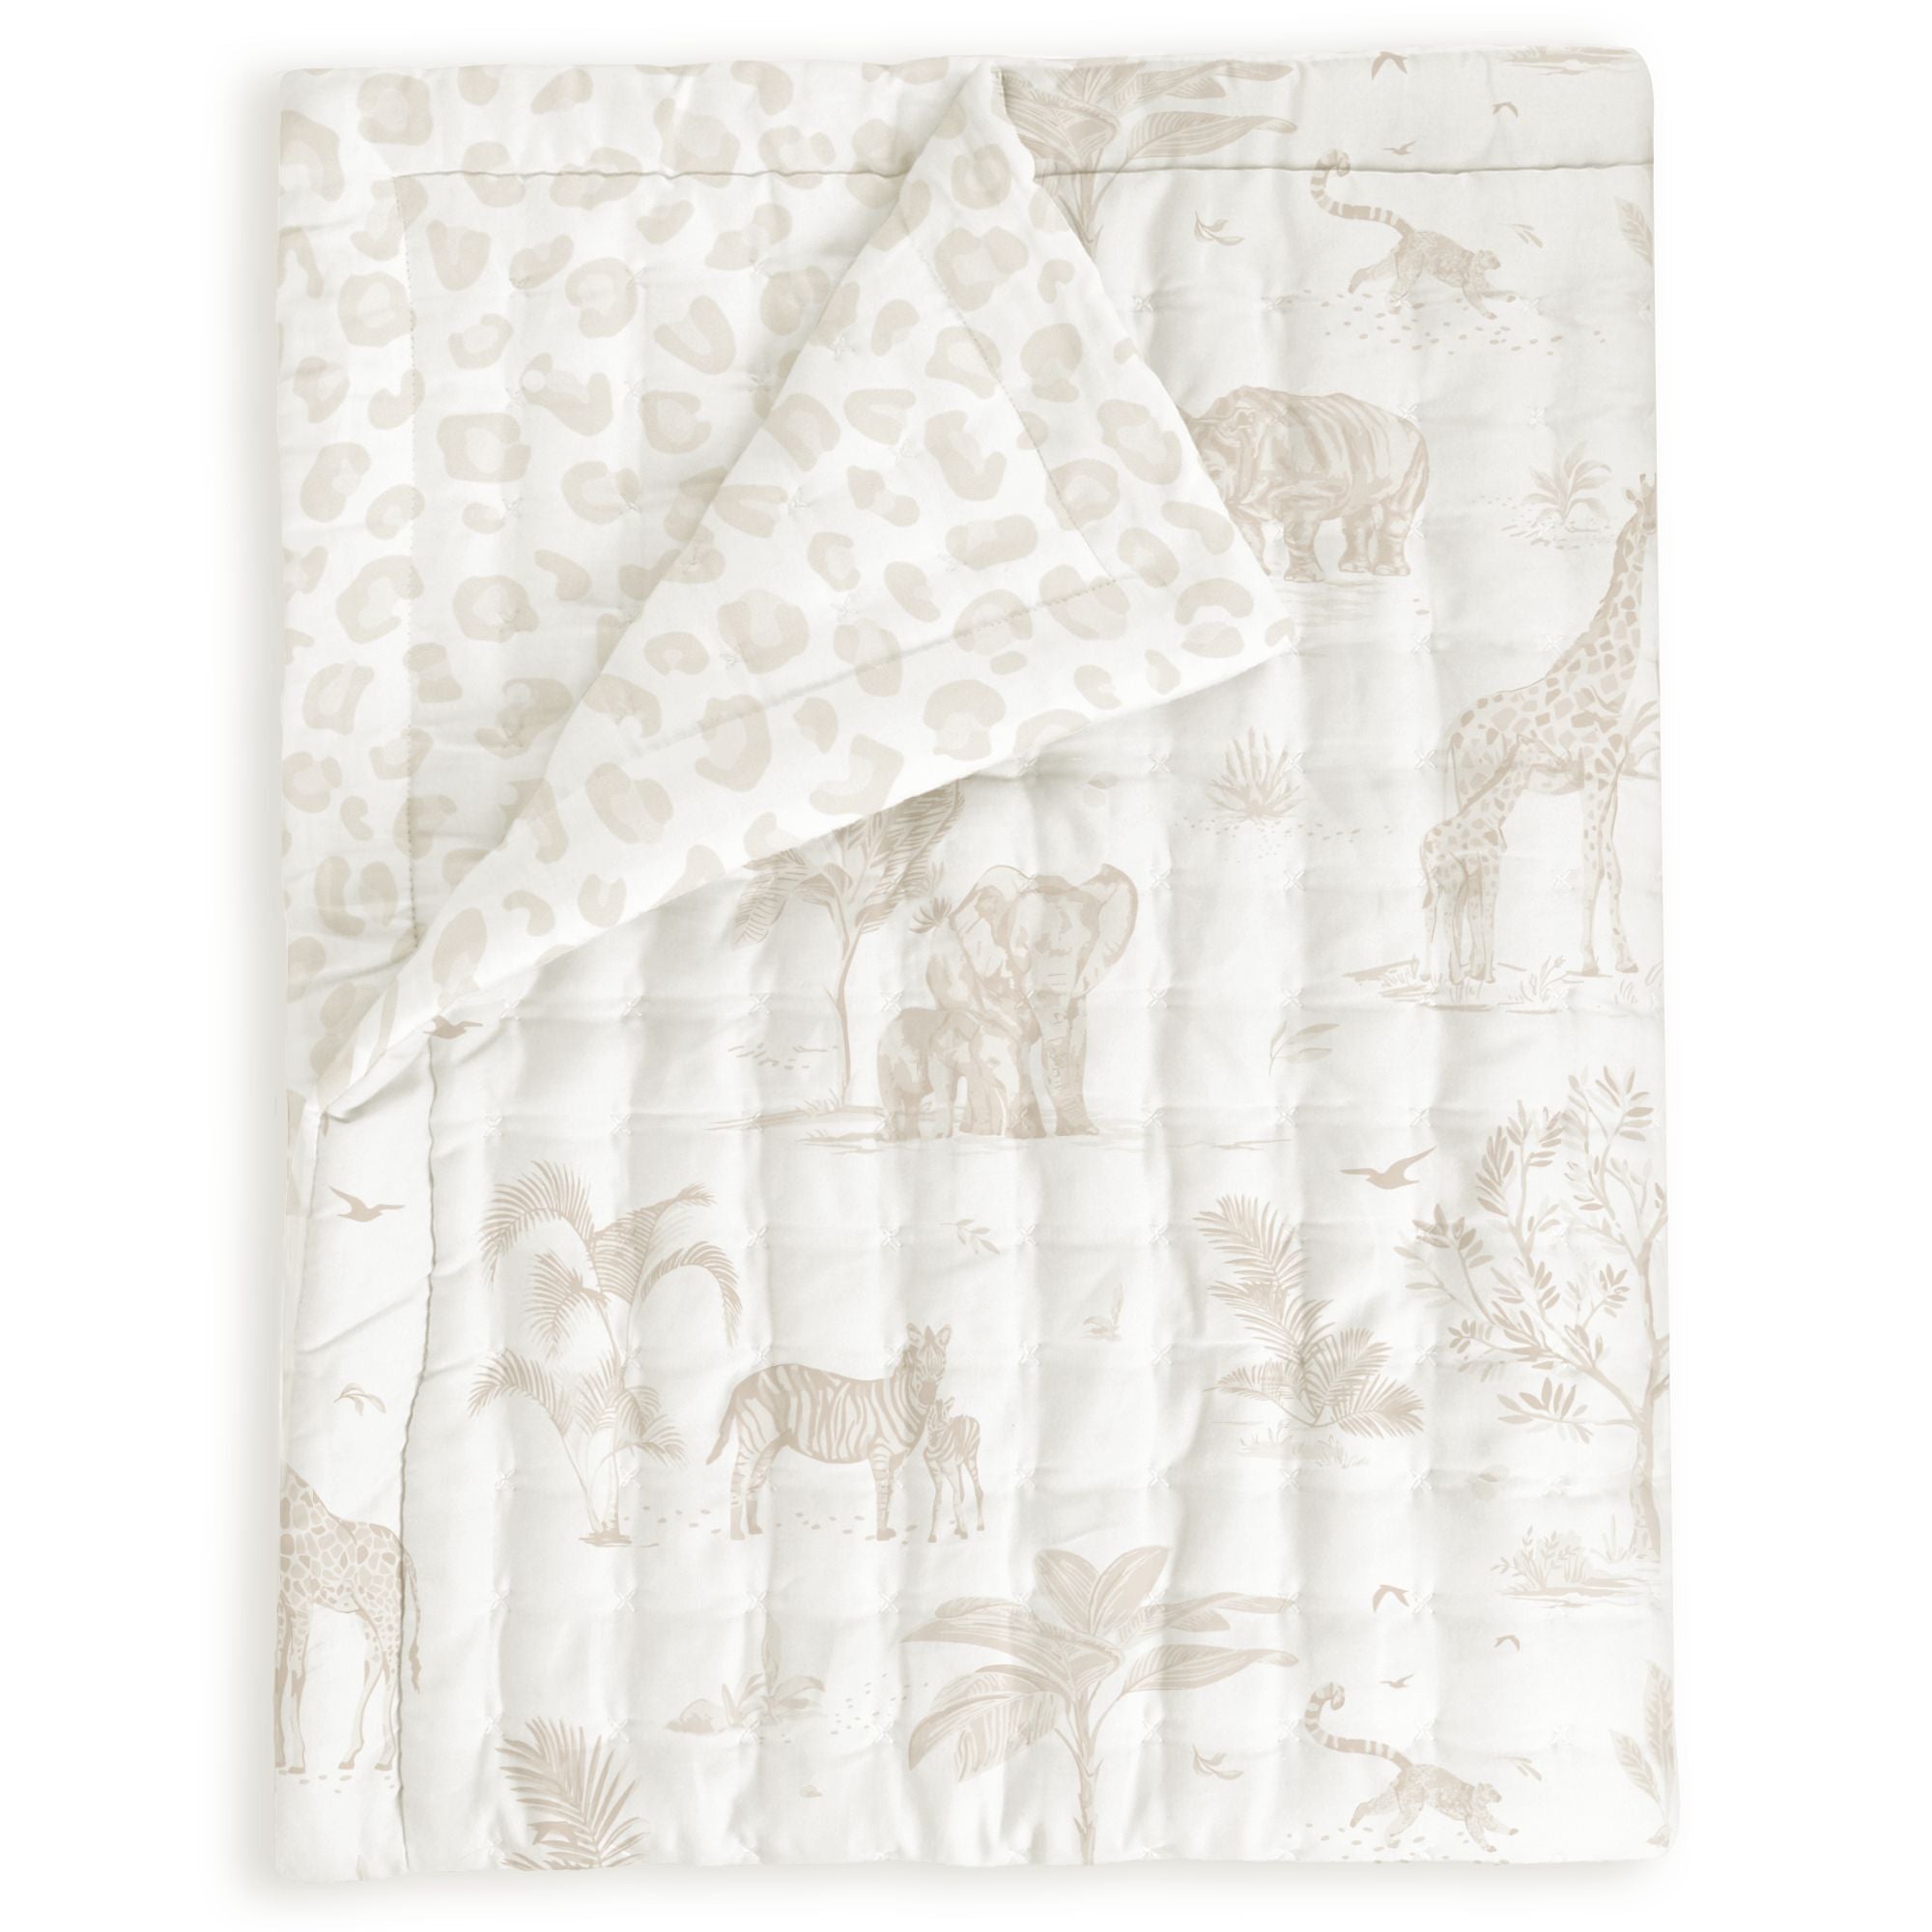 White Organic Cotton Comforter - Safari & Wild by Makemake Organics, featuring sketches of giraffes, elephants, and various foliage.